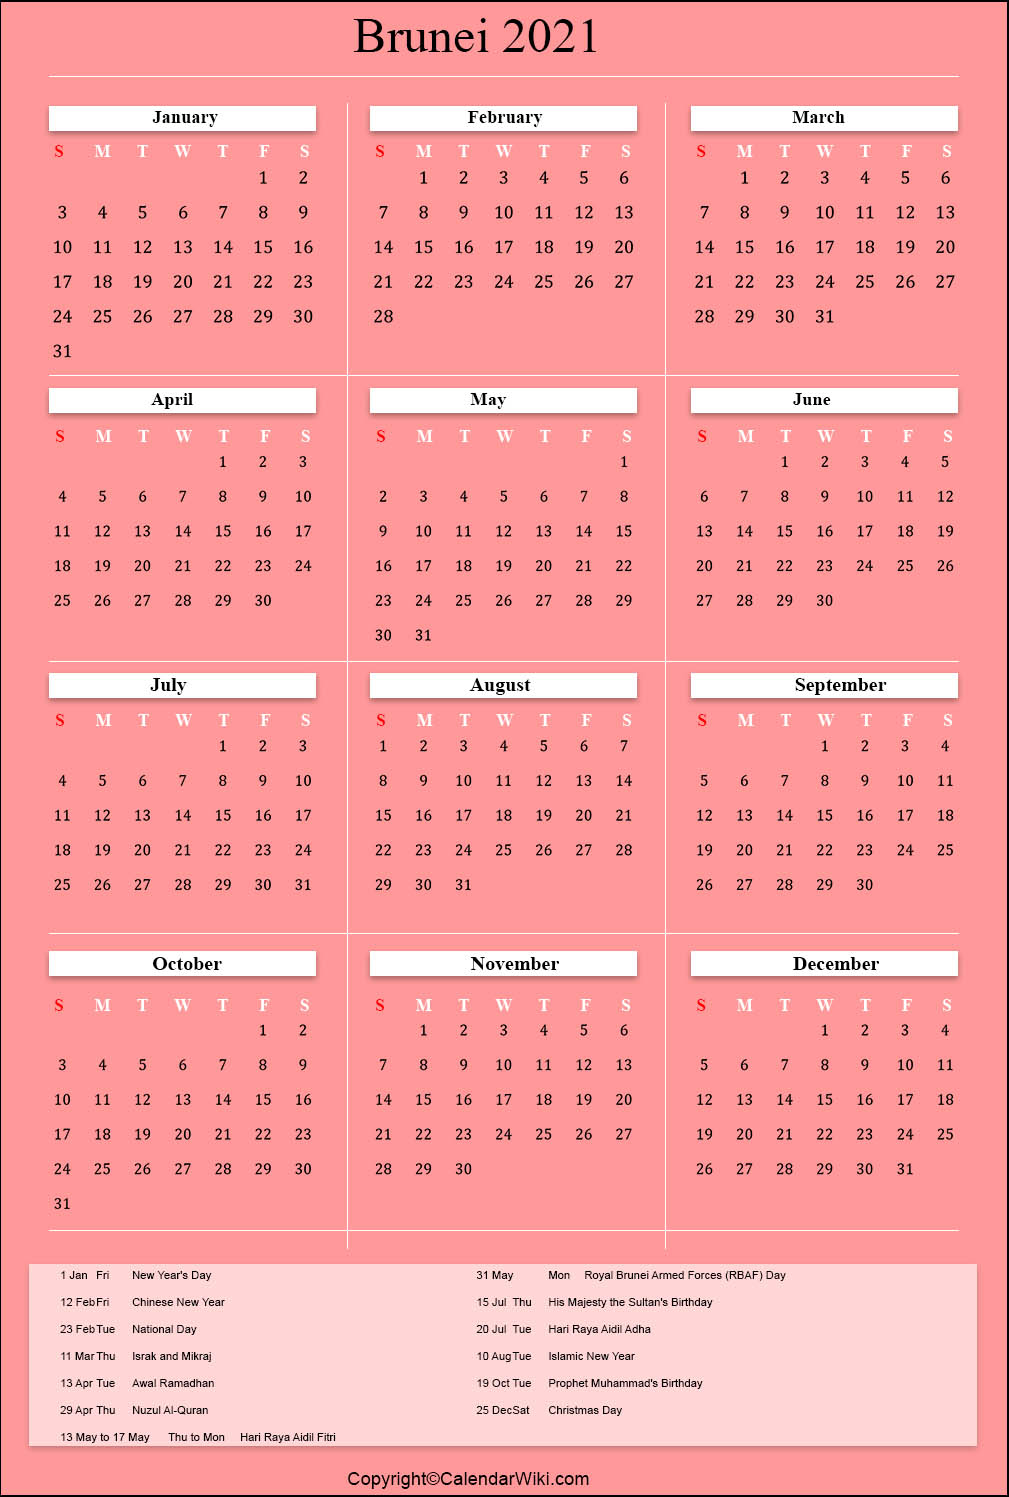 printable-brunei-calendar-2021-with-holidays-public-holidays